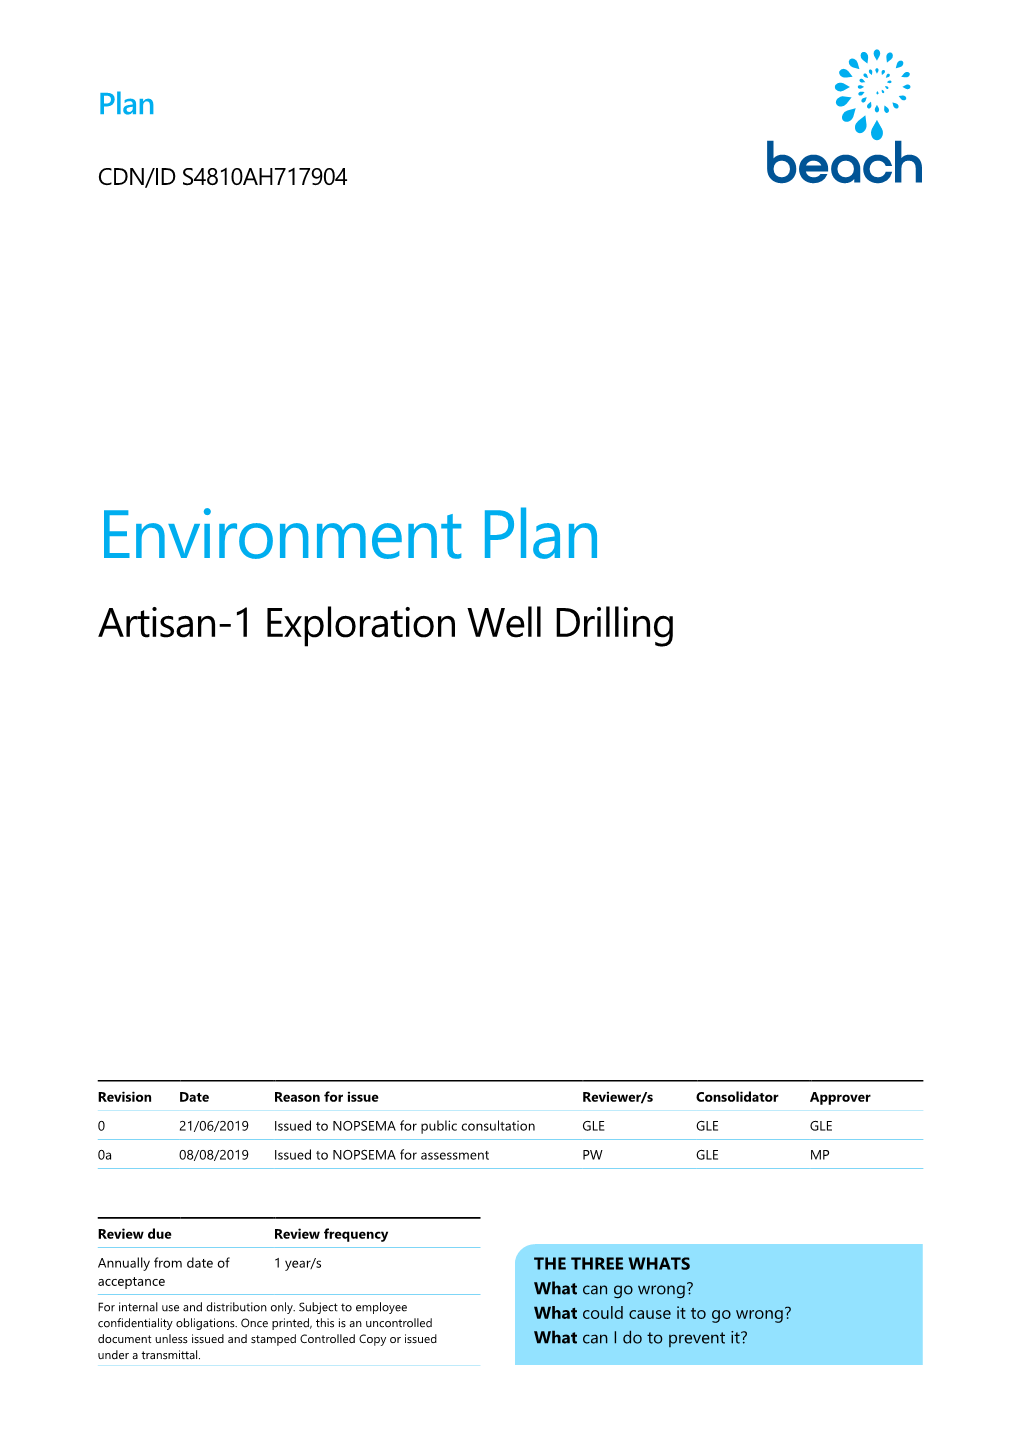 Environment Plan Artisan-1 Exploration Well Drilling